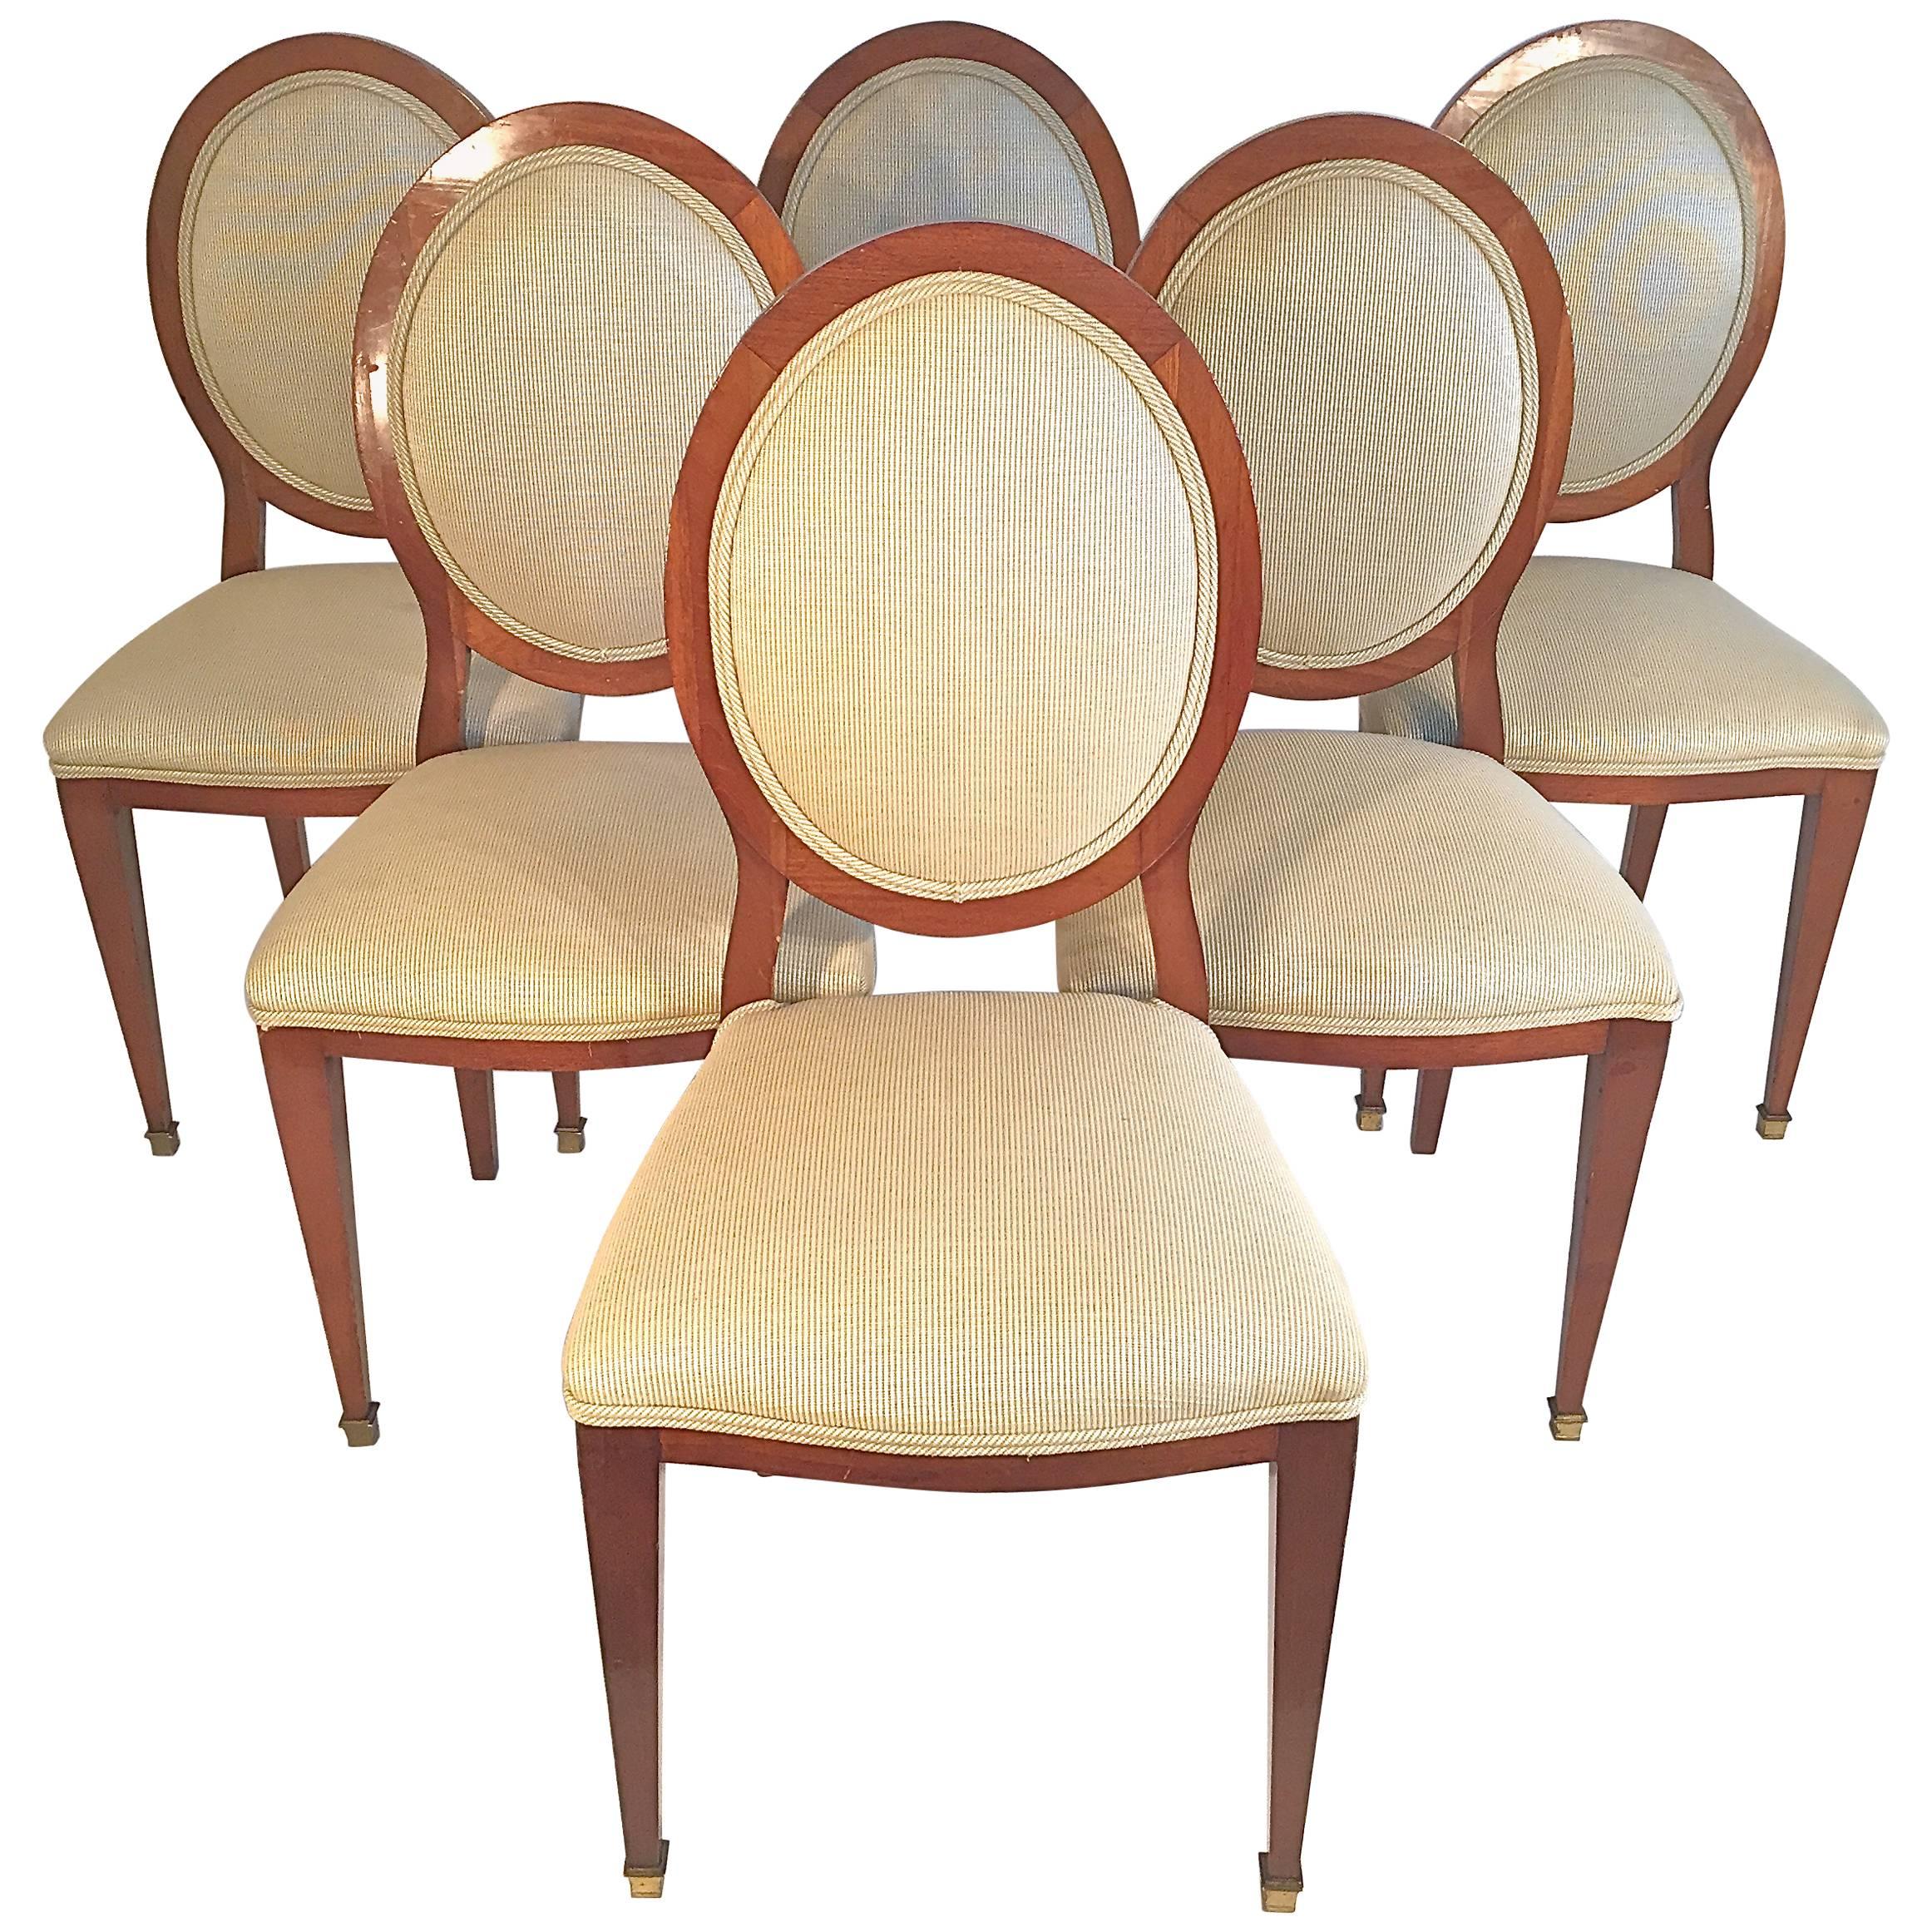 Set of Six Biedermeier Dining Chairs